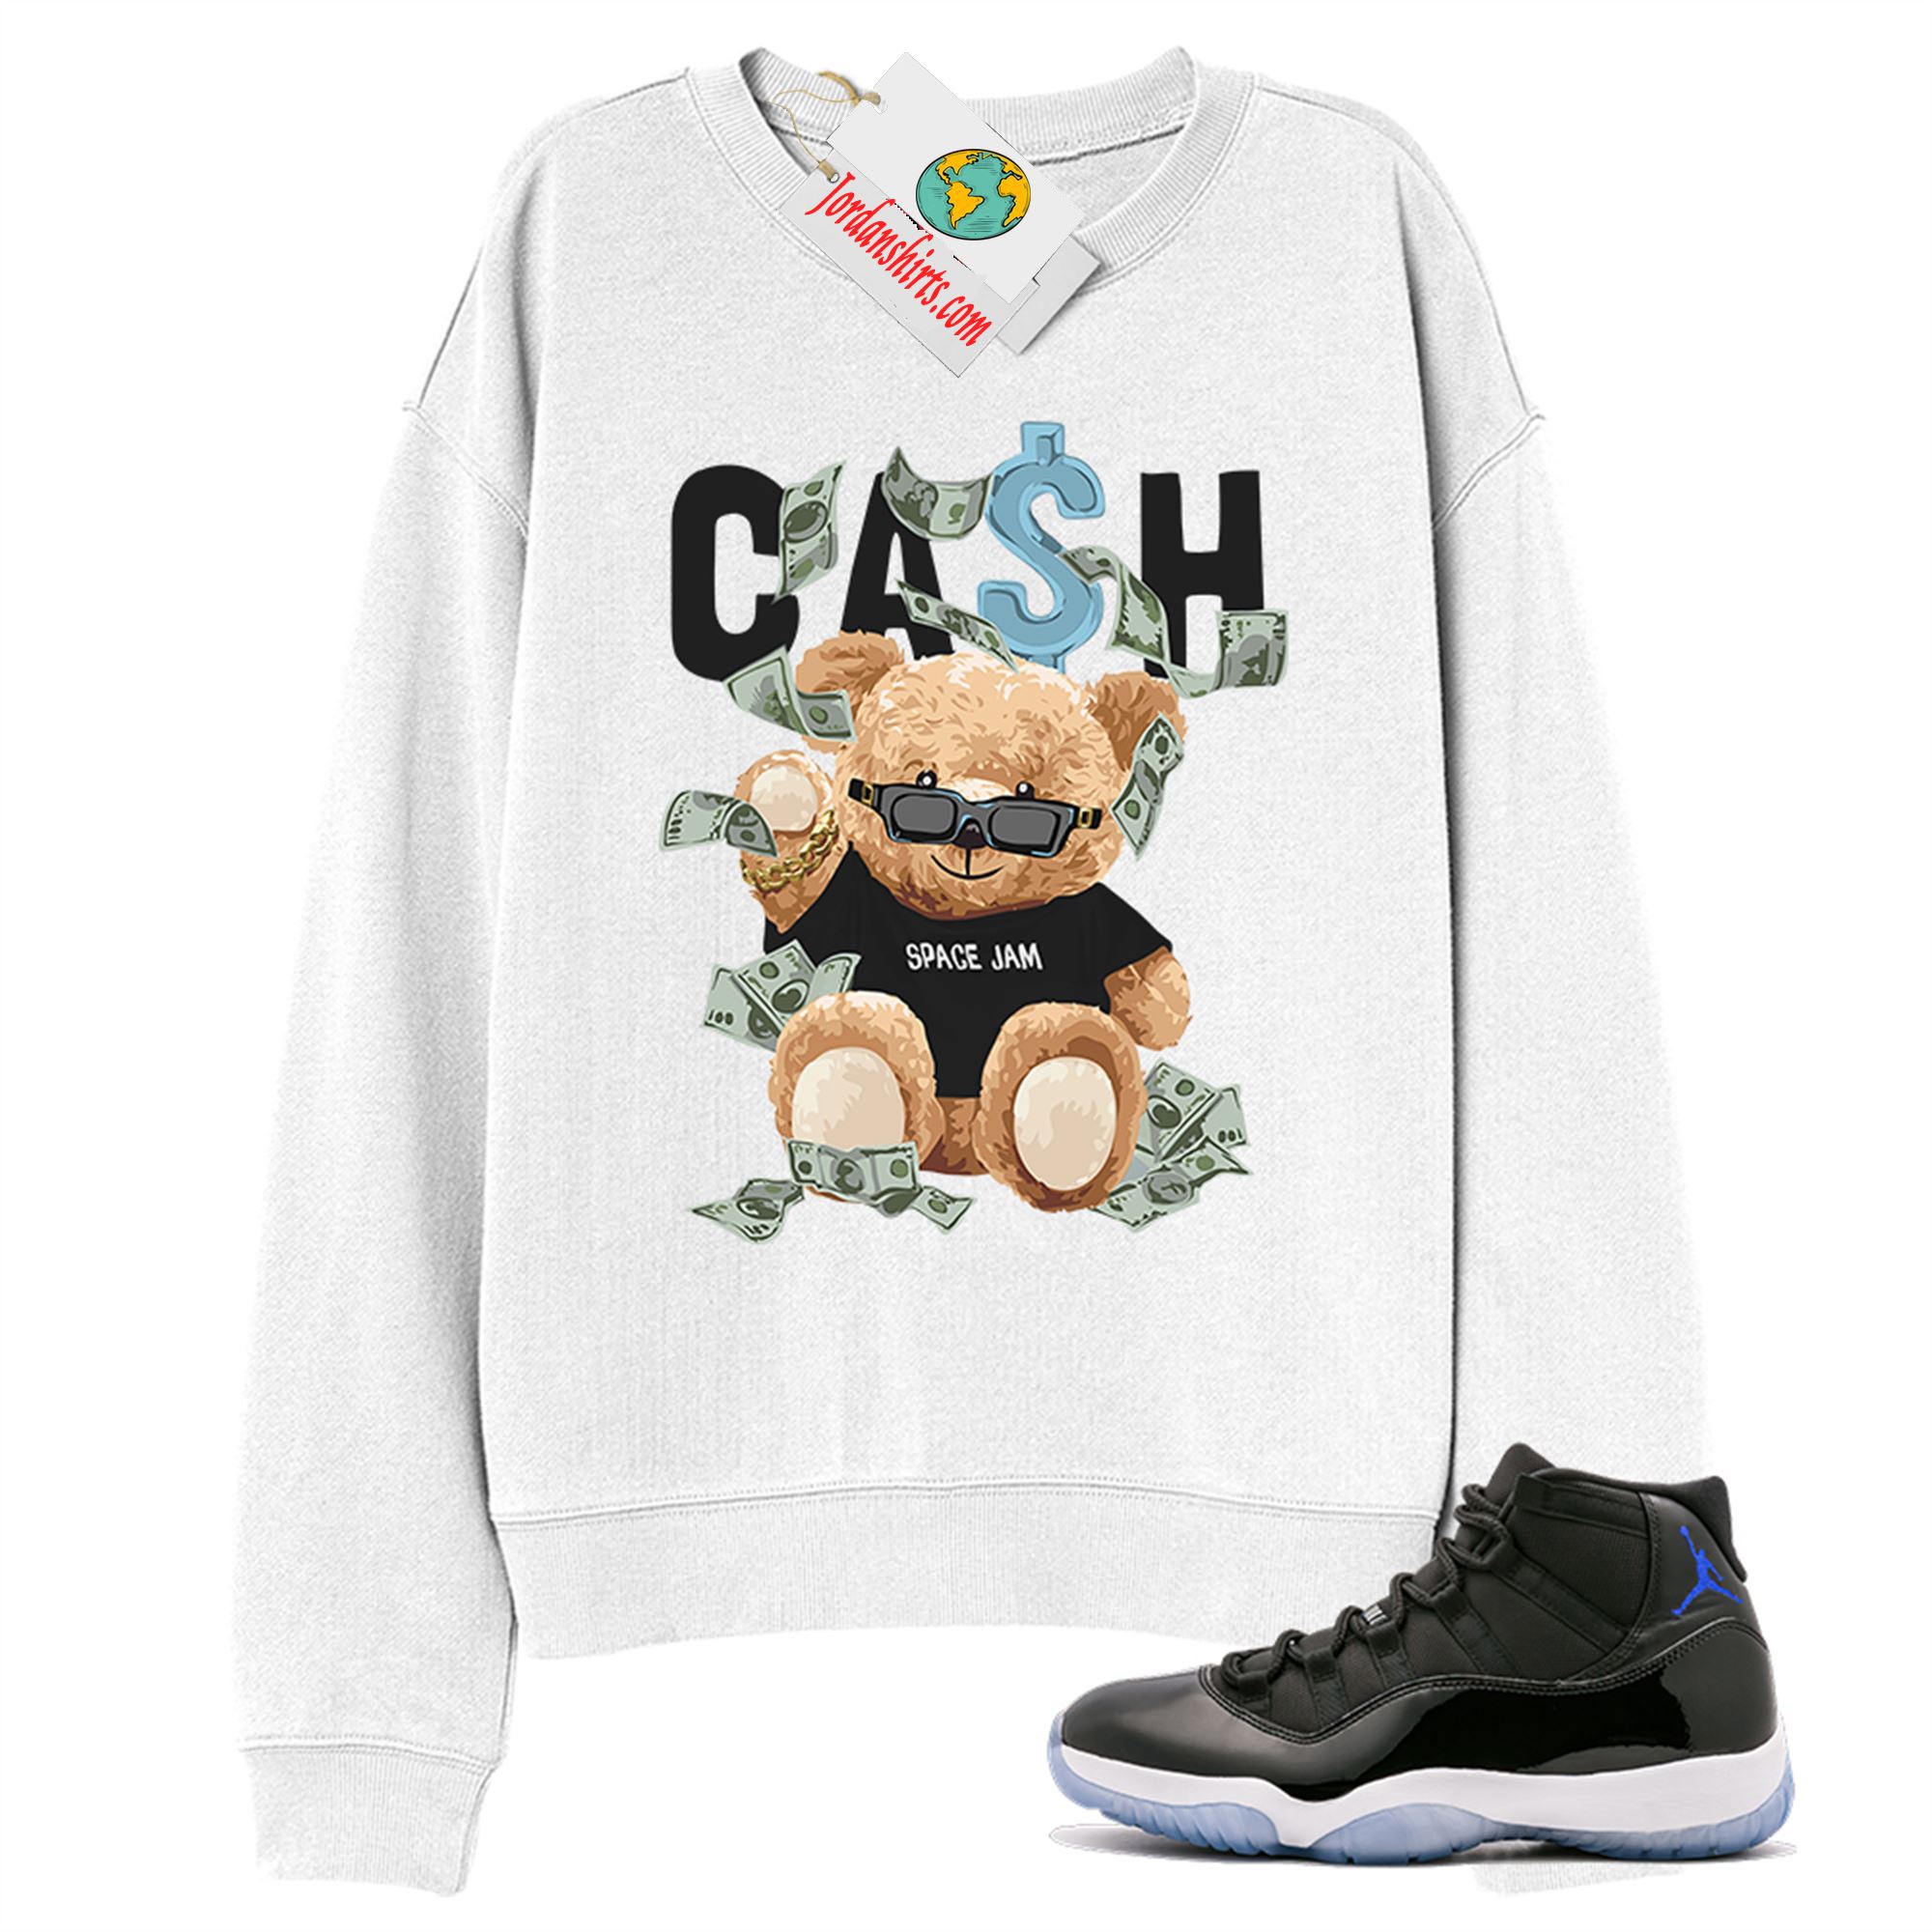 Jordan 11 Sweatshirt, Cash Teddy Bear In Sunglasses White Sweatshirt Air Jordan 11 Space Jam 11s Full Size Up To 5xl